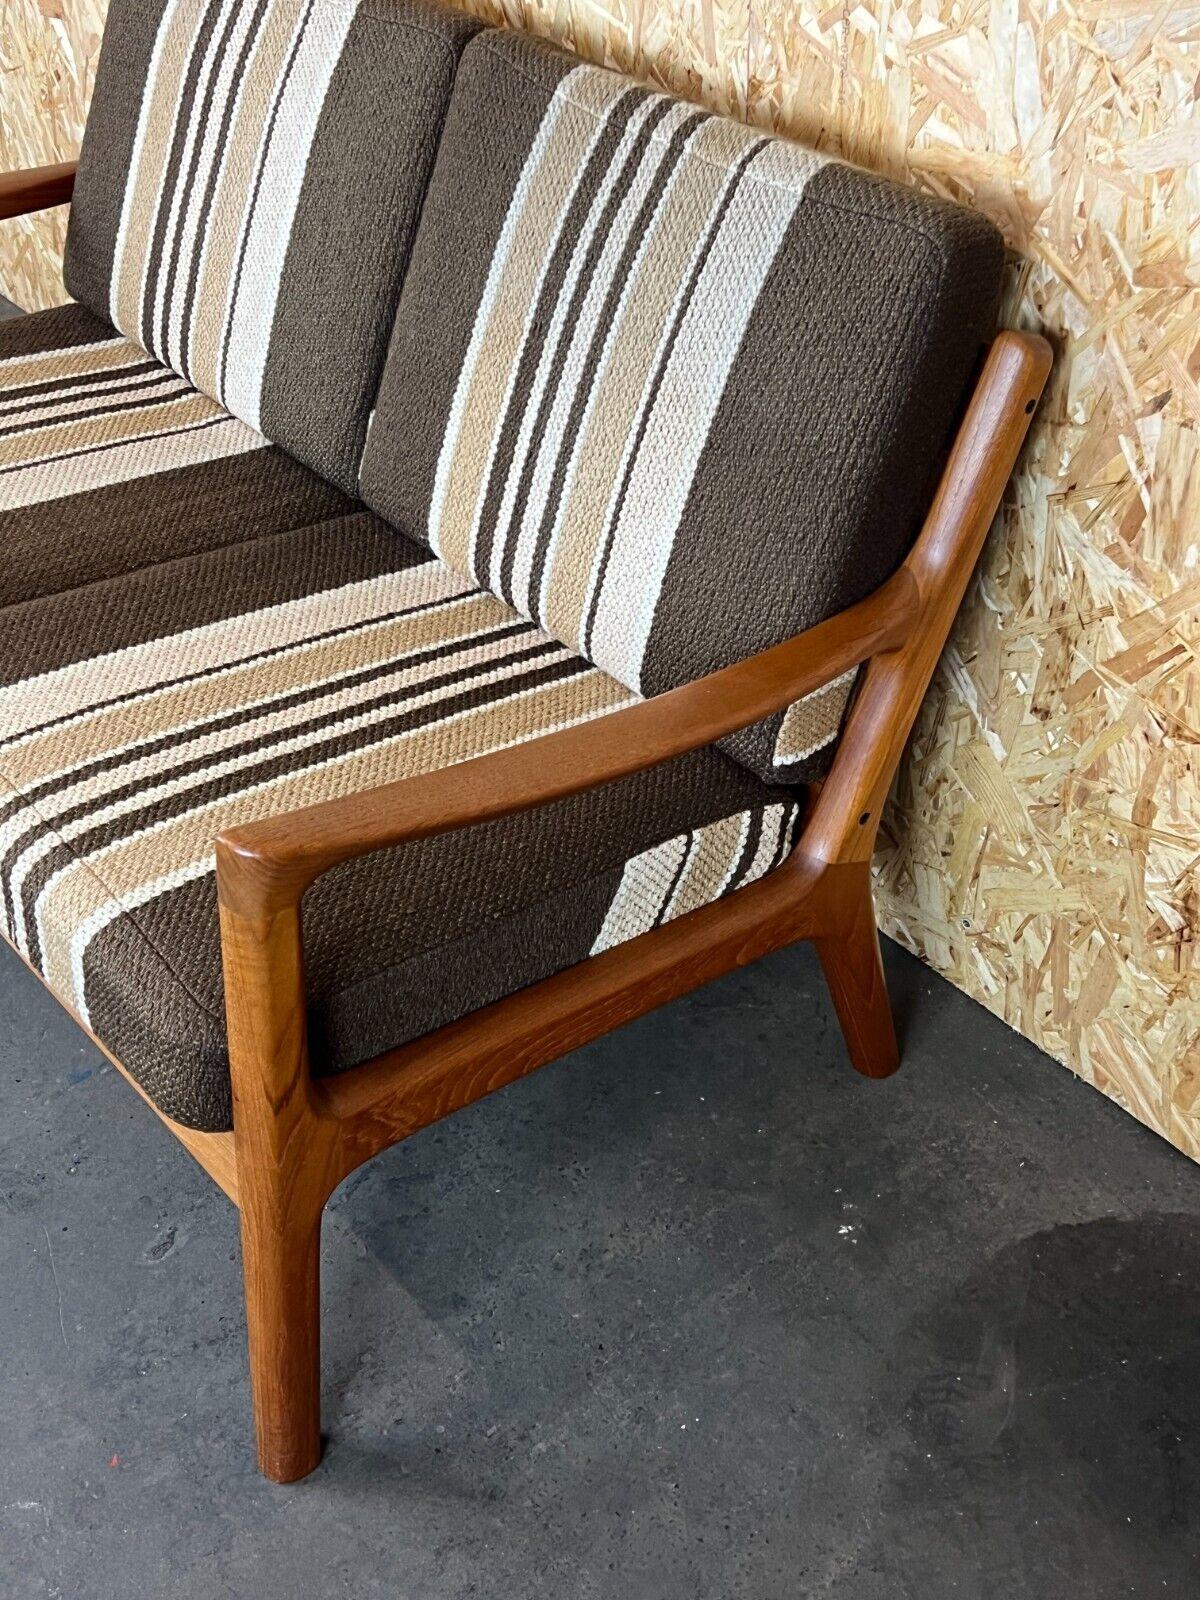 60s 70s Teak 2 Seater Sofa Couch Ole Wanscher Cado France & Son Danish Design For Sale 3